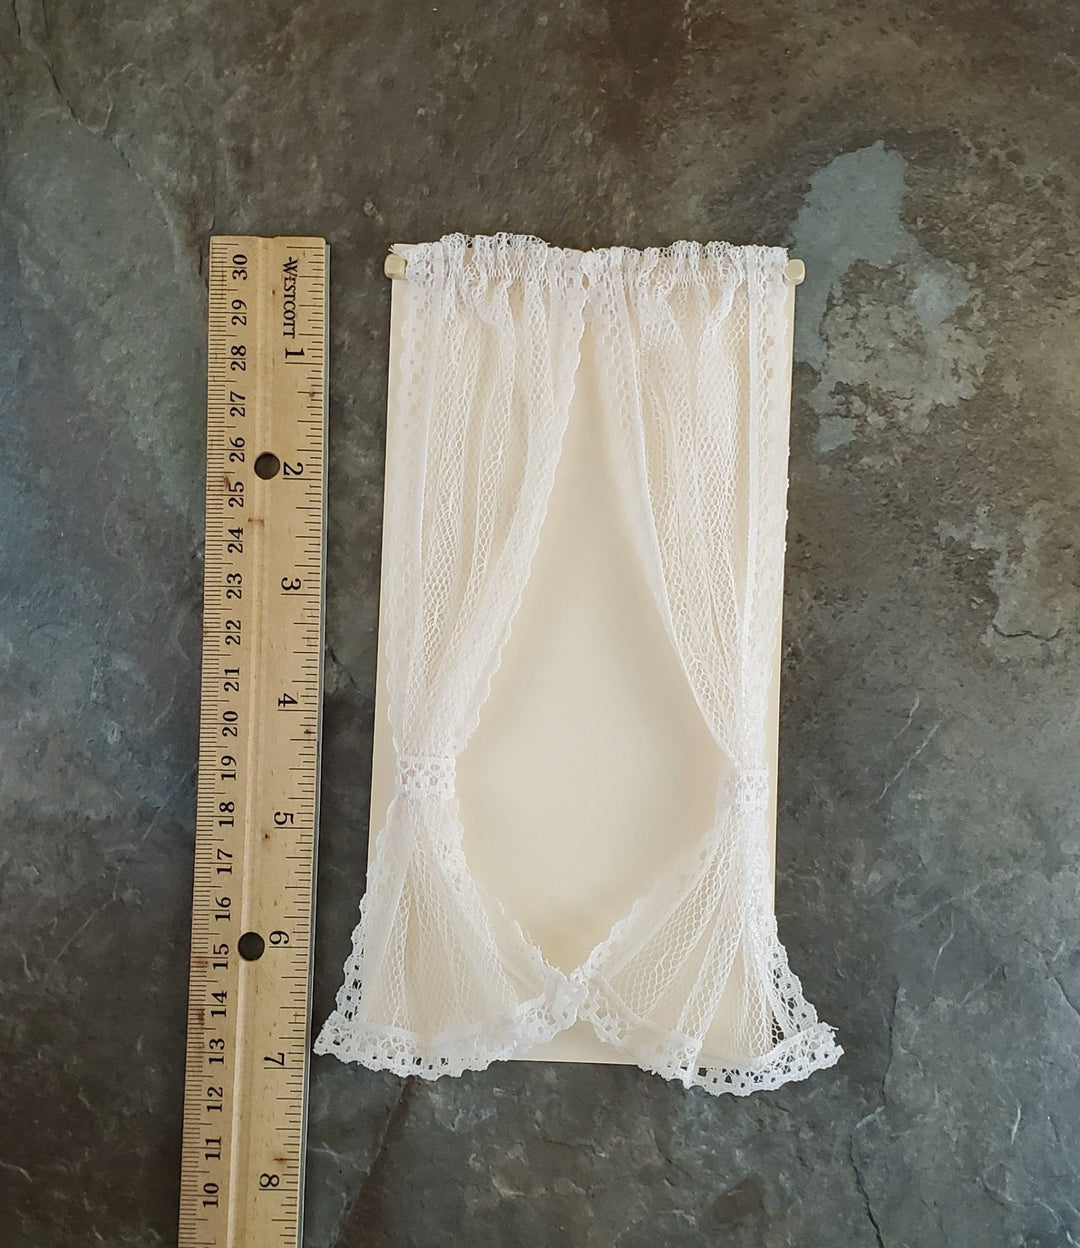 Dollhouse Miniature Lace Curtains Cream with Curtain Rod 1:12 Scale - Miniature Crush